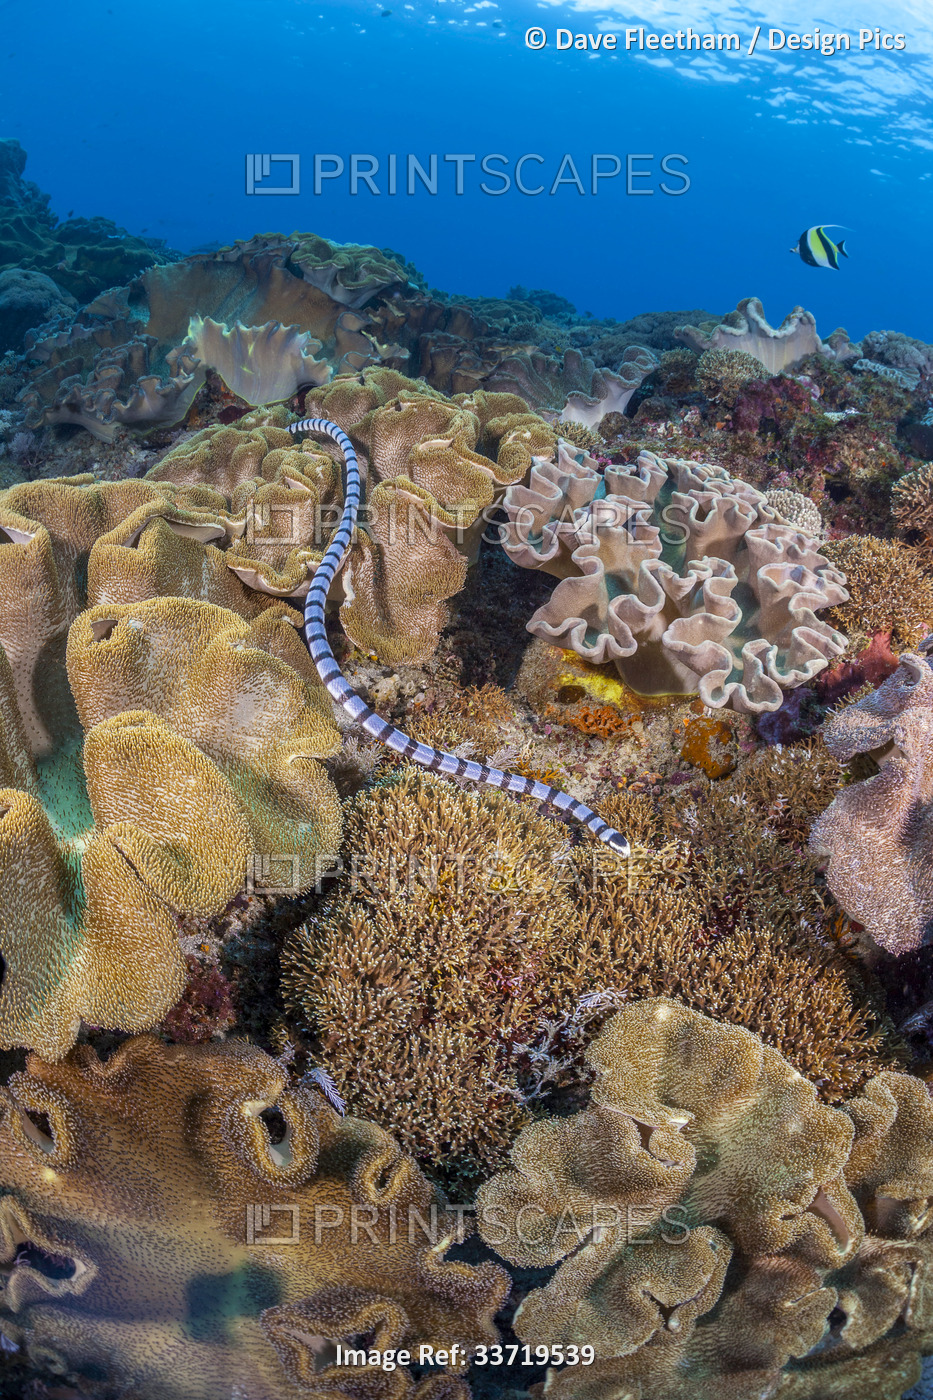 Banded Sea Krait or Yellow-lipped Sea Krait (Laticauda colubrina) are a type of ...